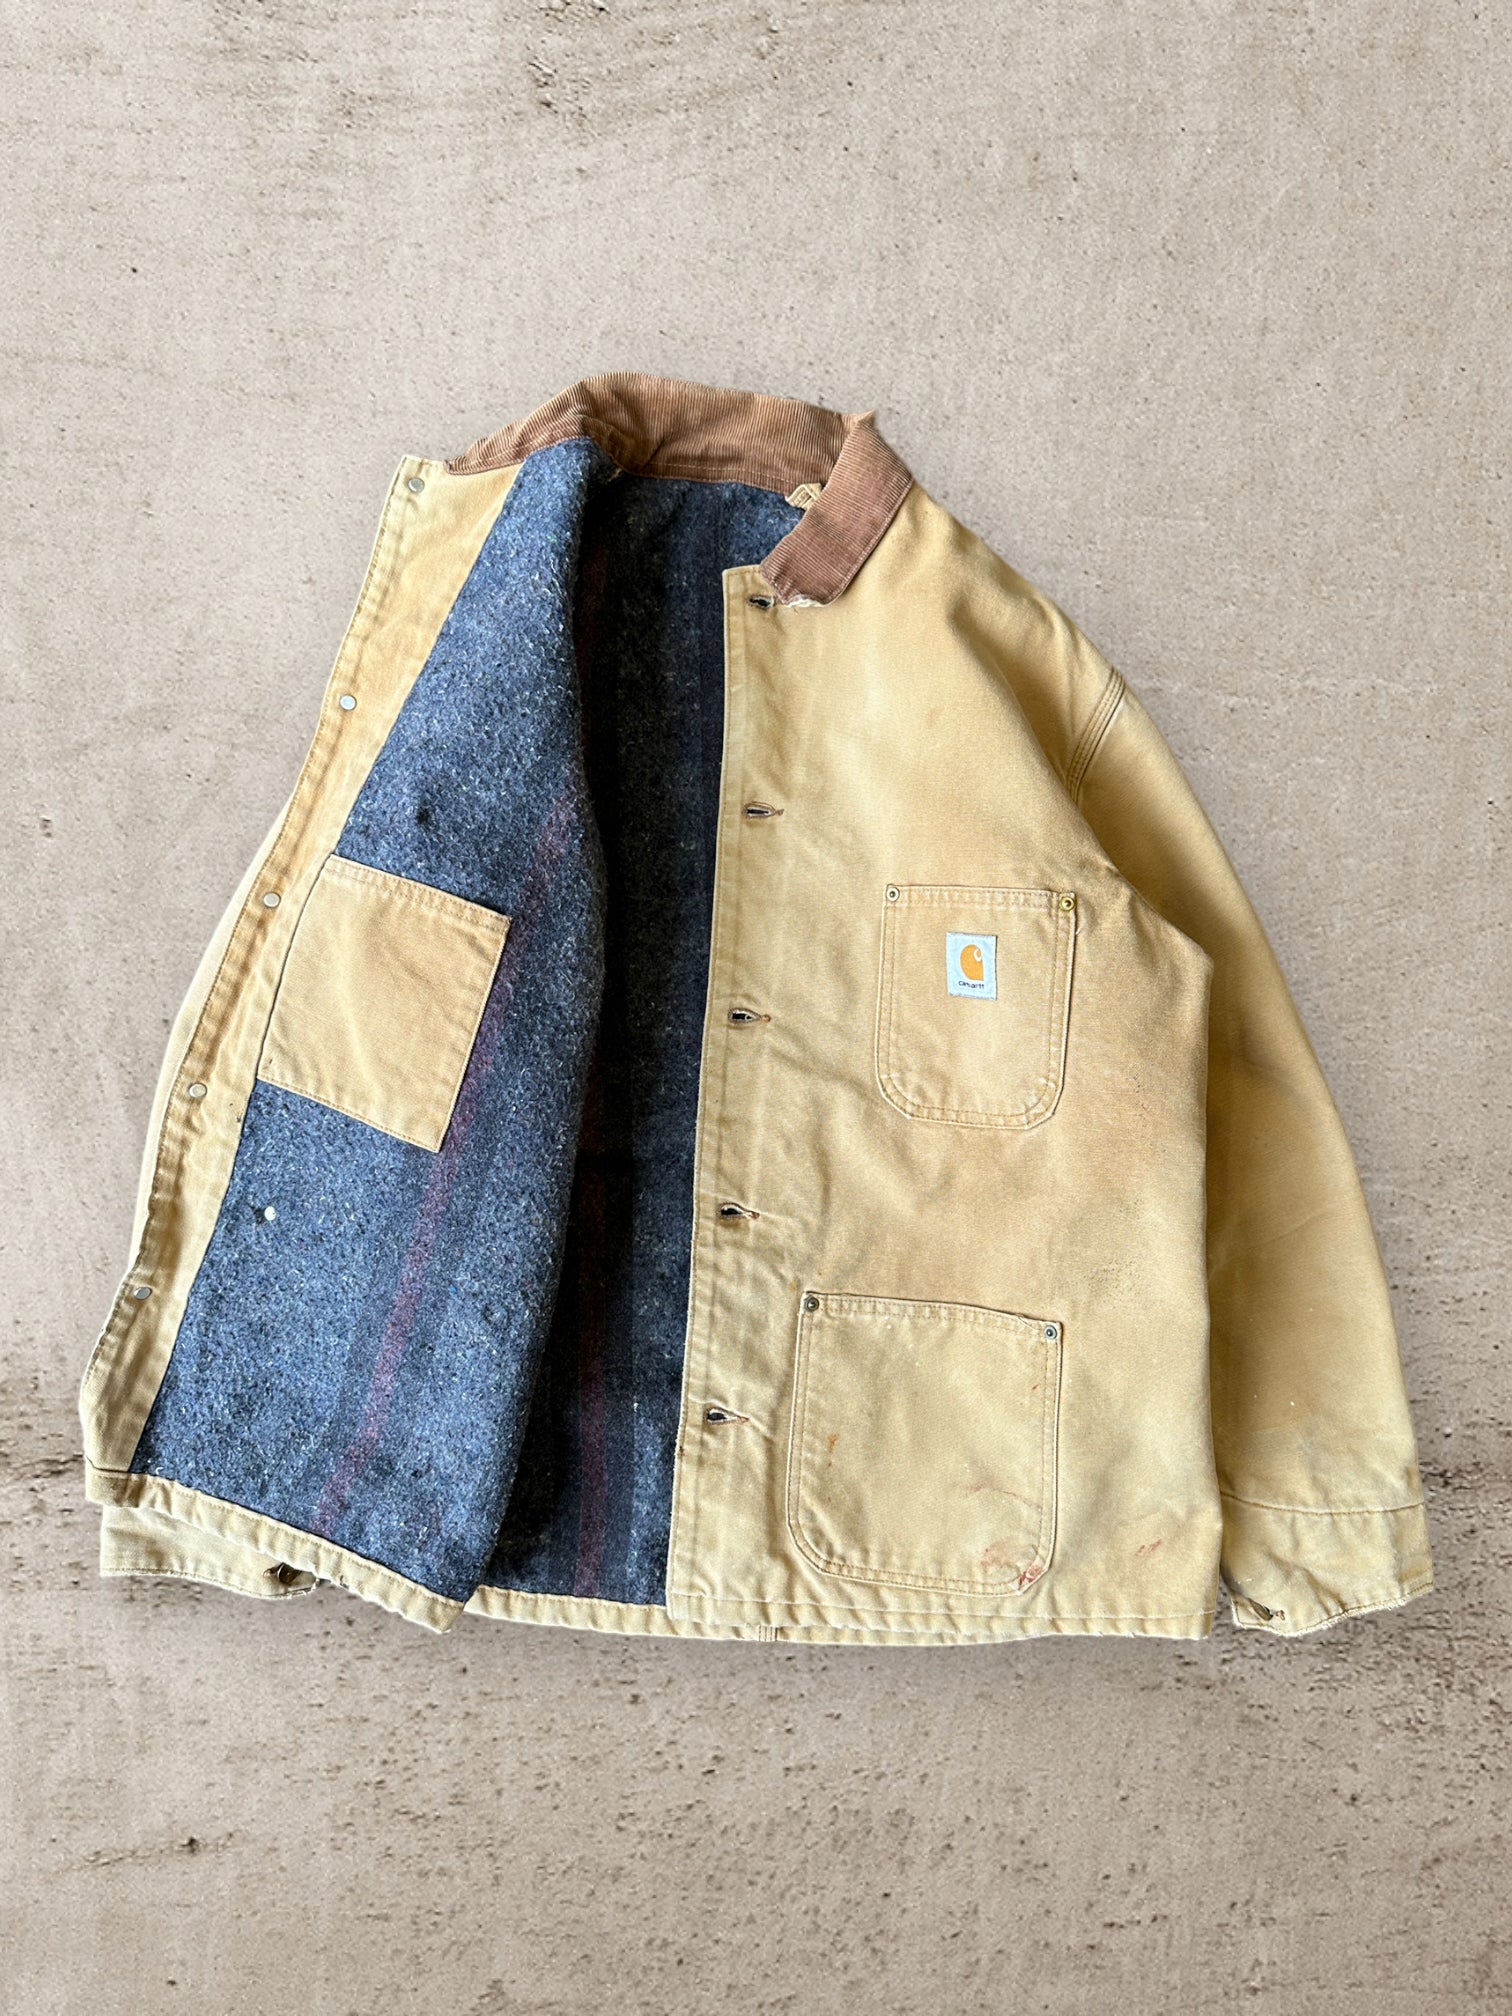 90s Carhartt Blanket Lined Chore Jacket - XL